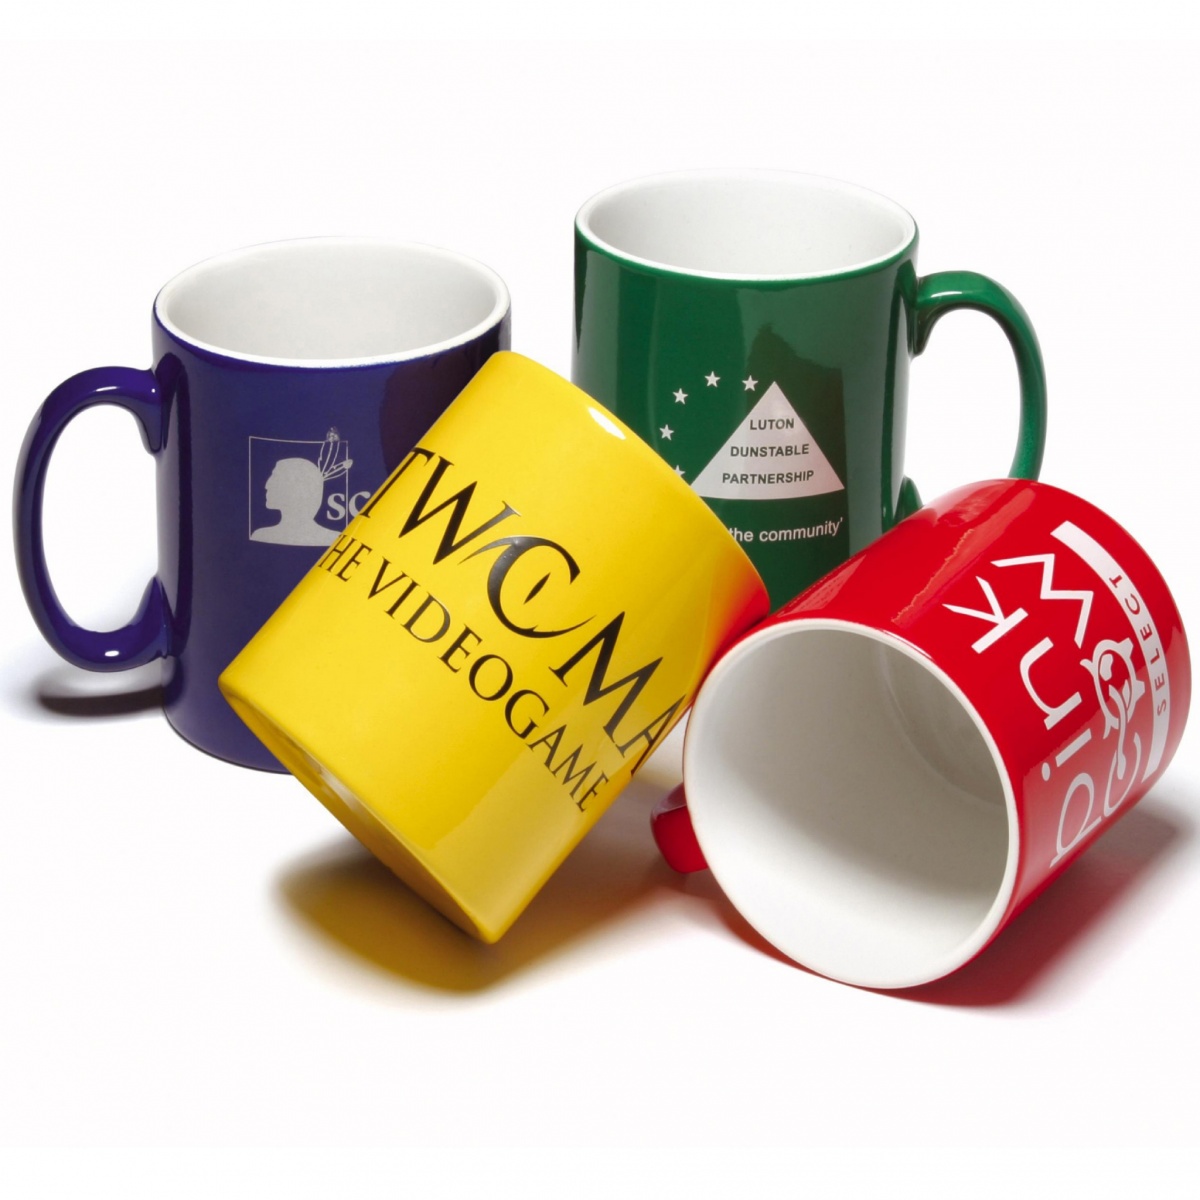 a selection of printed mugs